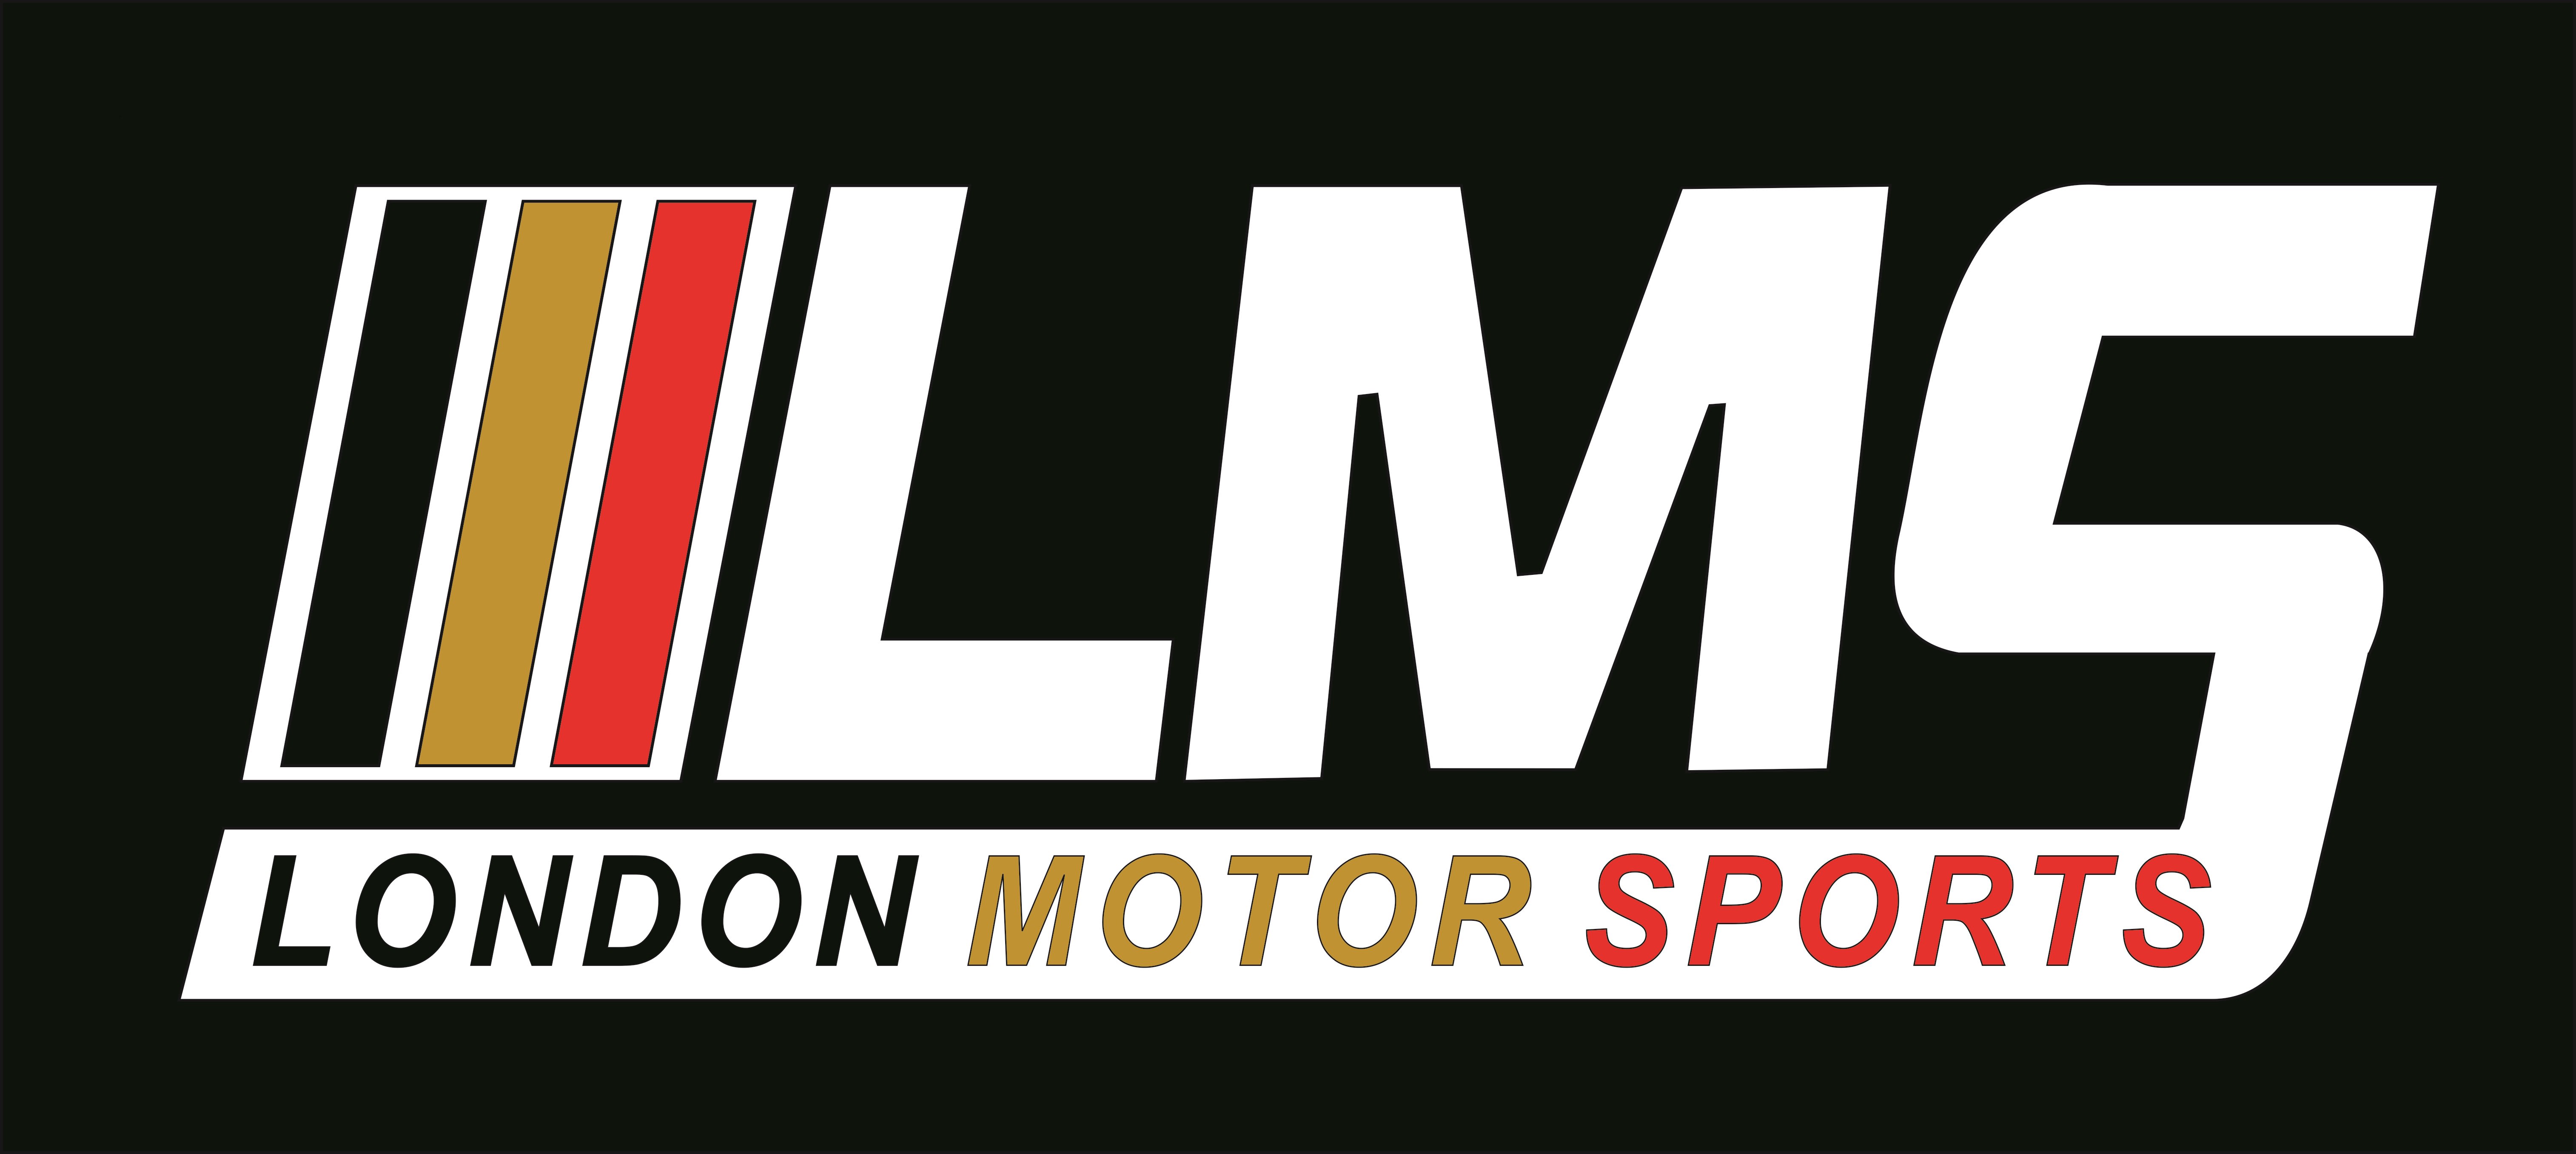 London Motor Sports Limited logo